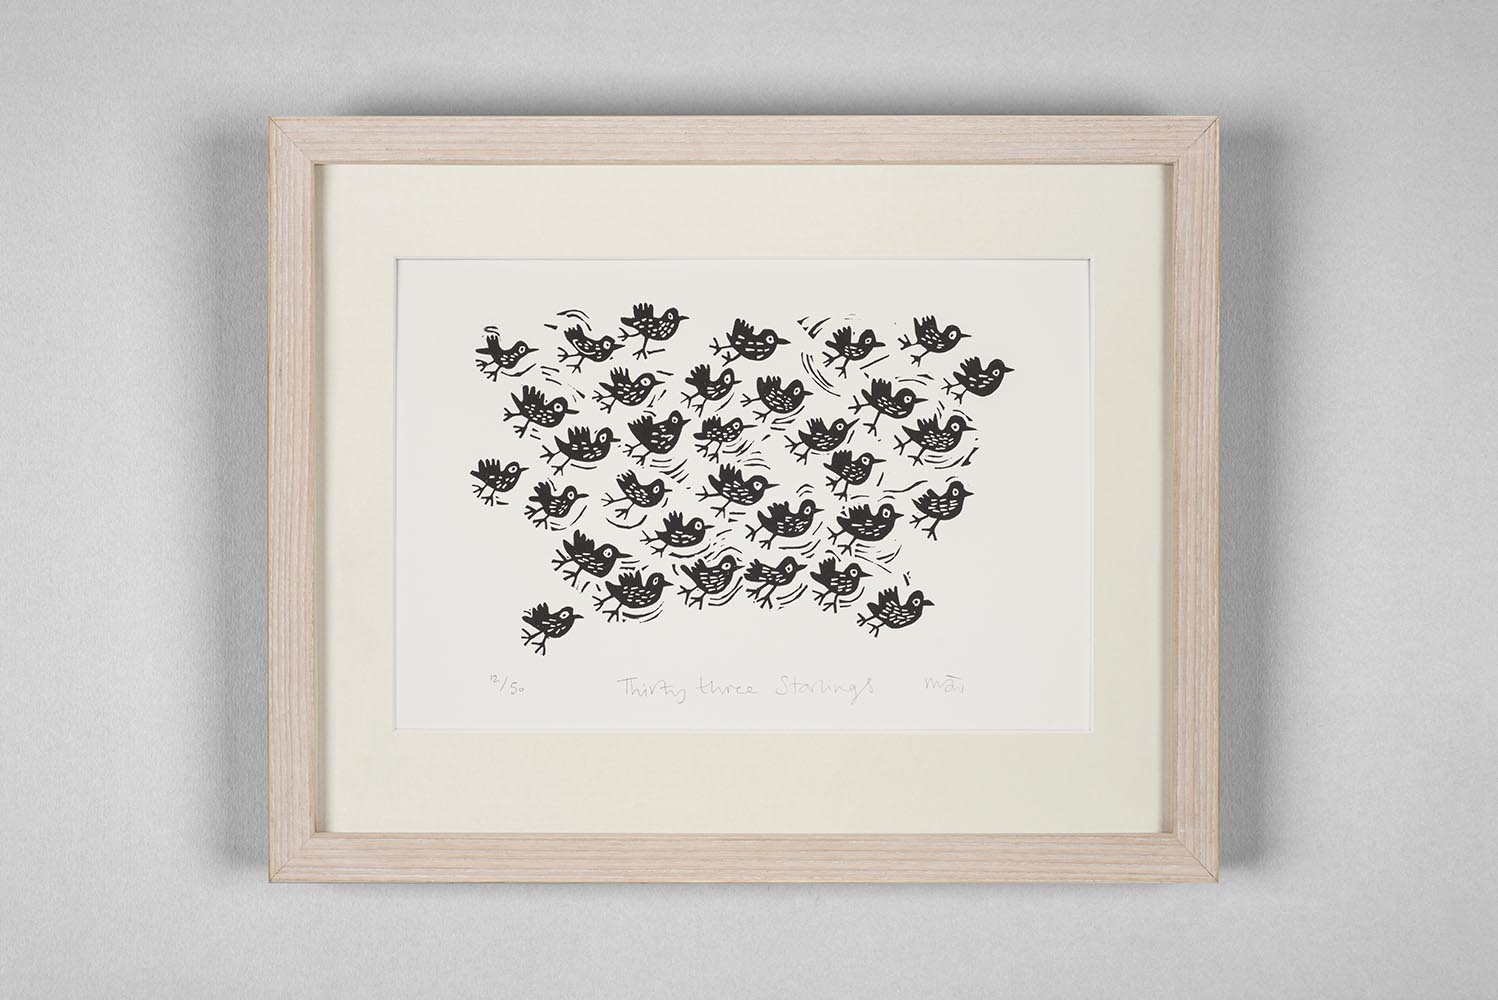 33 Starlings